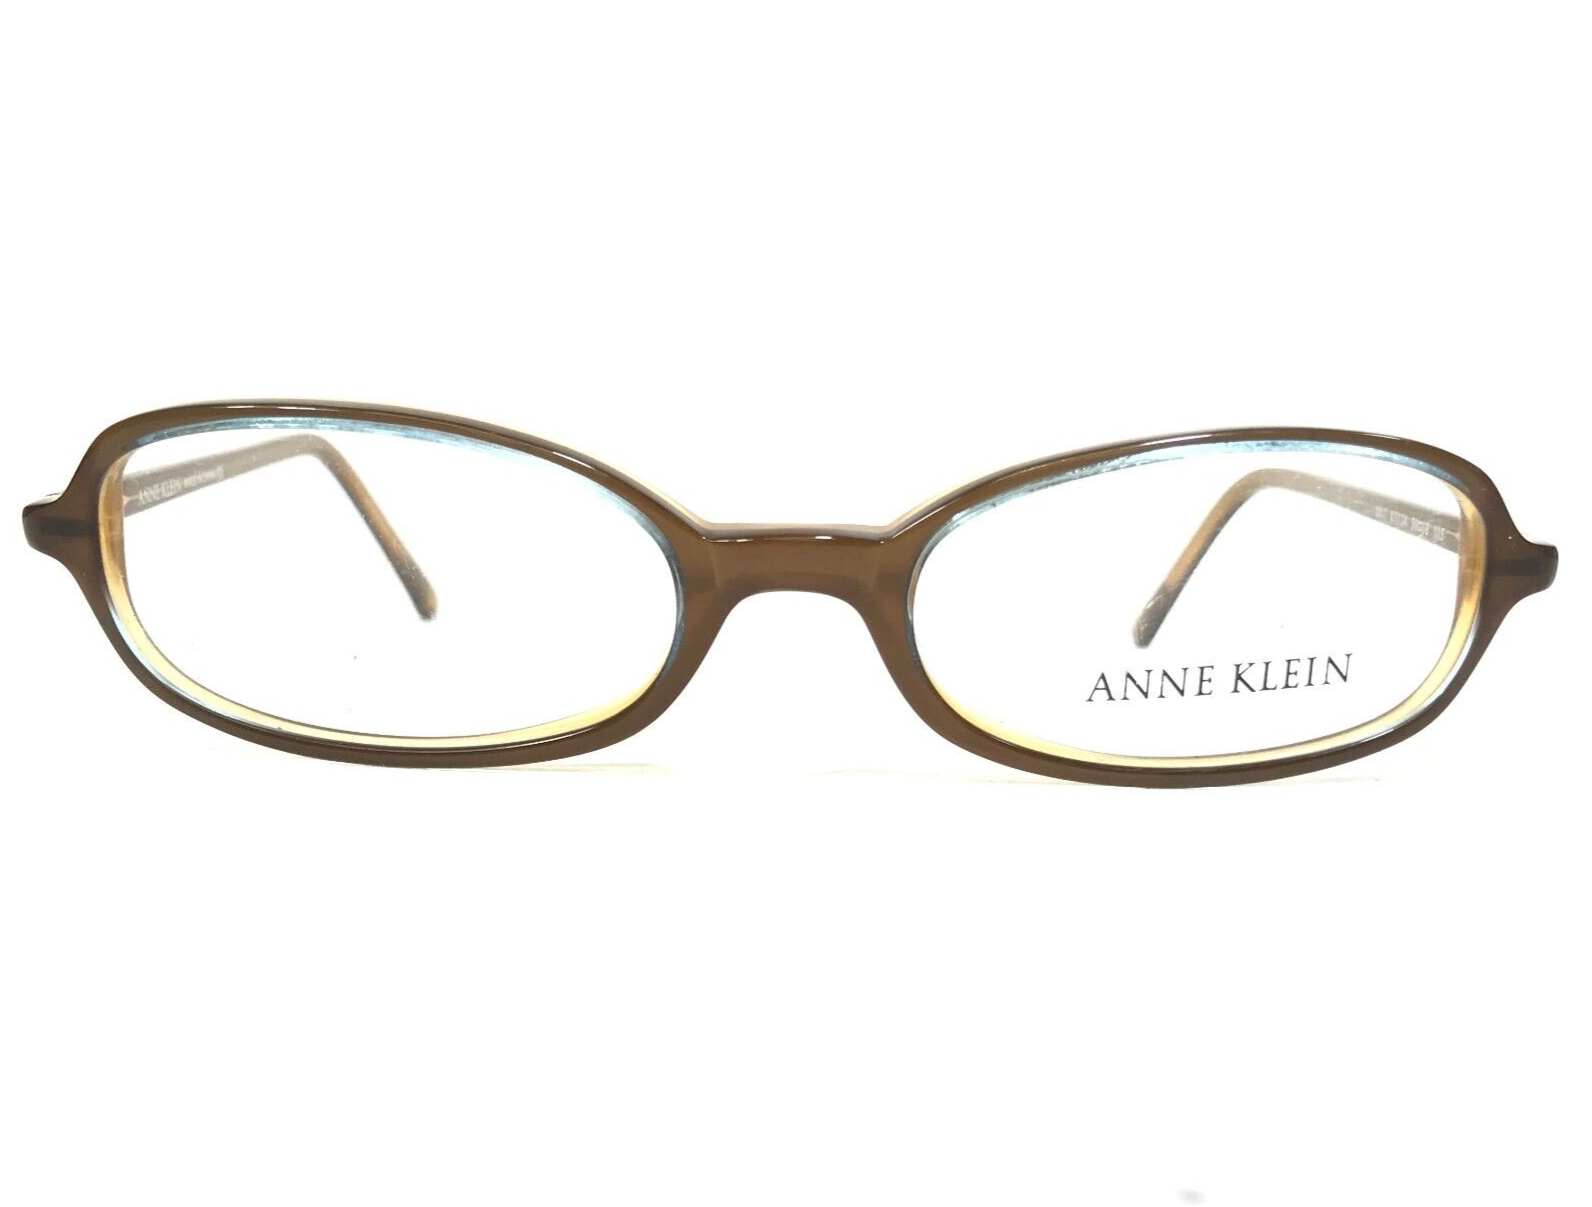 Primary image for Anne Klein Eyeglasses Frames 8017 K5124 Clear Brown Blue Oval 50-18-135